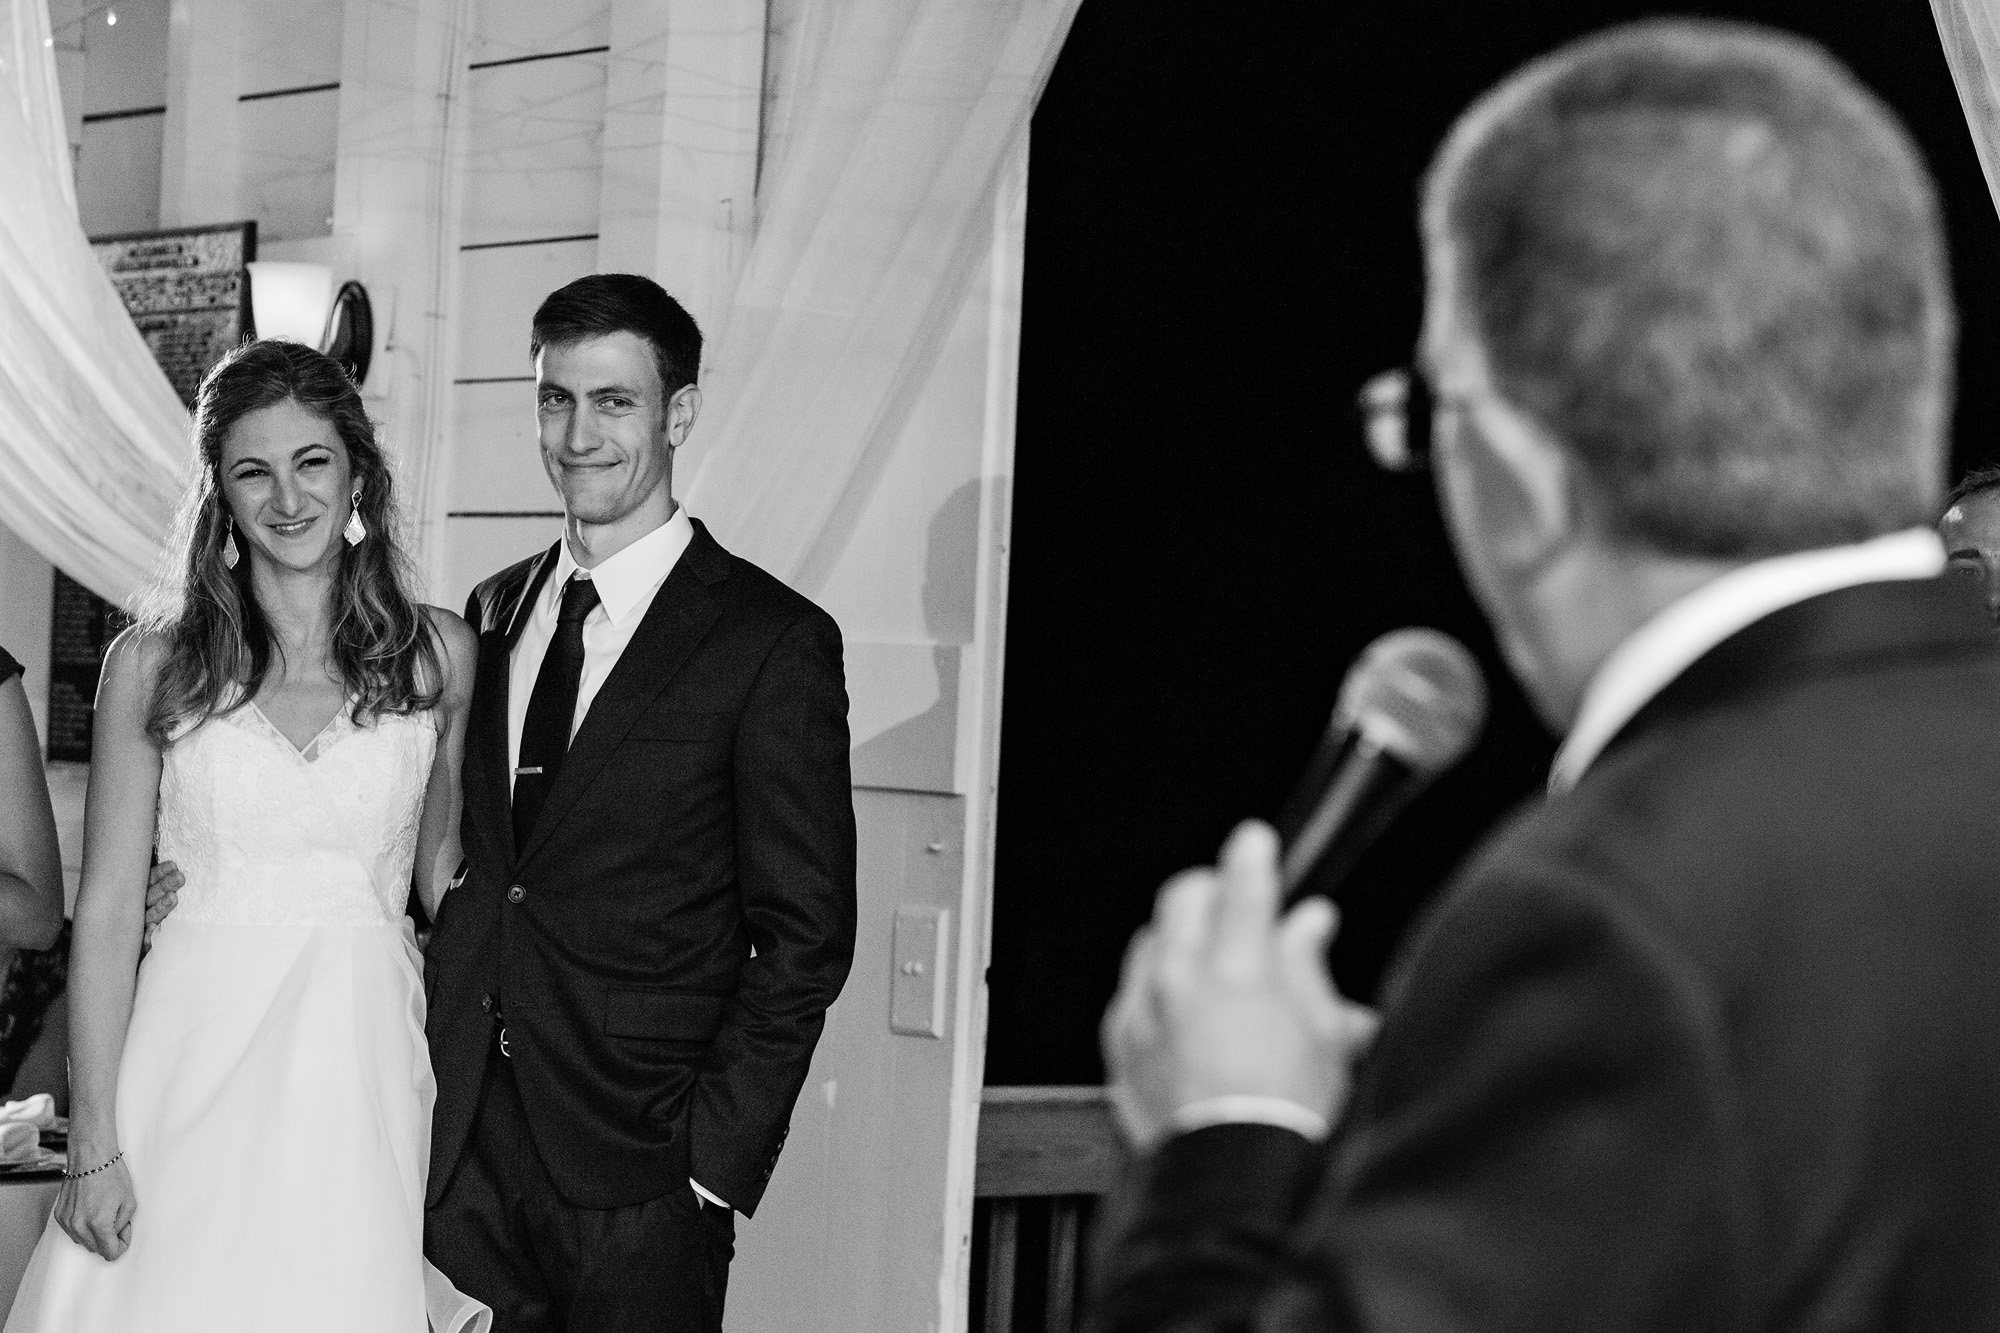 The bride and groom enjoy a toast during a Causeway Club wedding reception